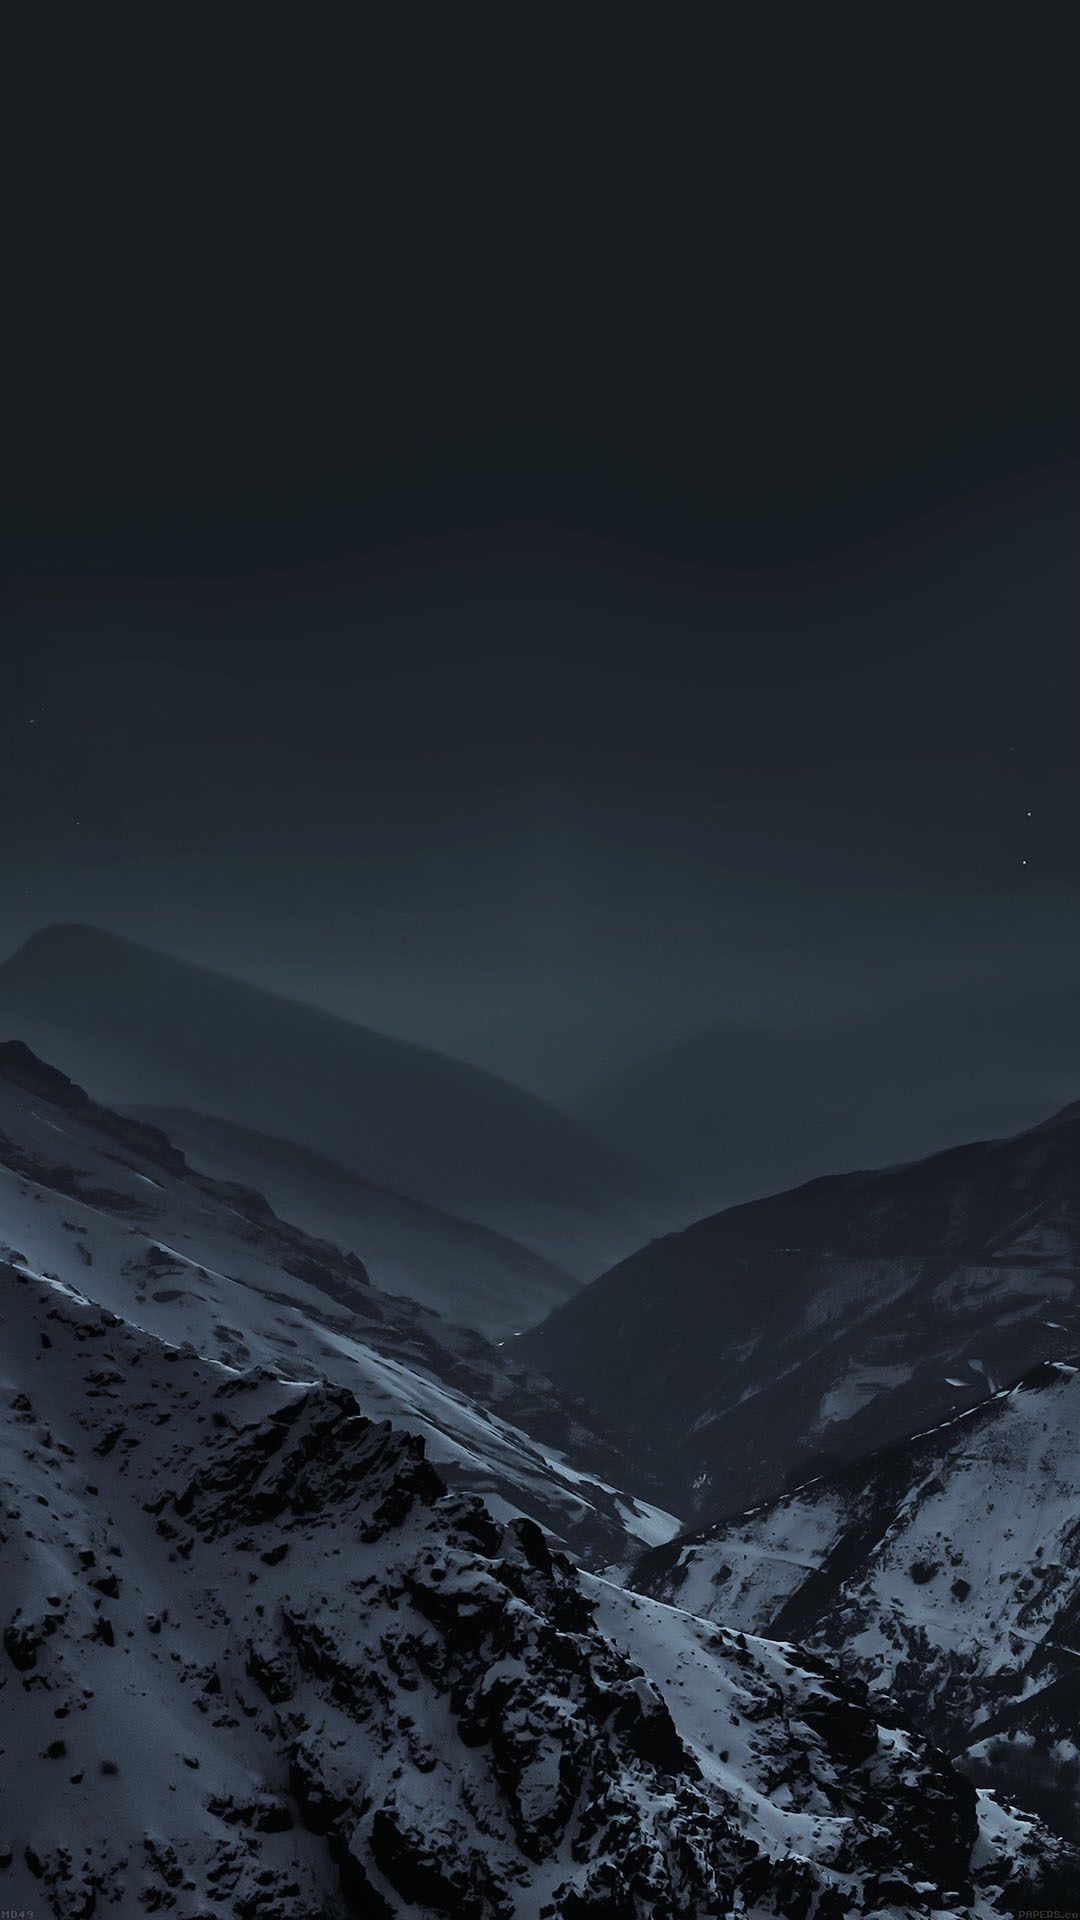 iphone wallpaper full hd,himmel,schwarz,natur,atmosphäre,berg